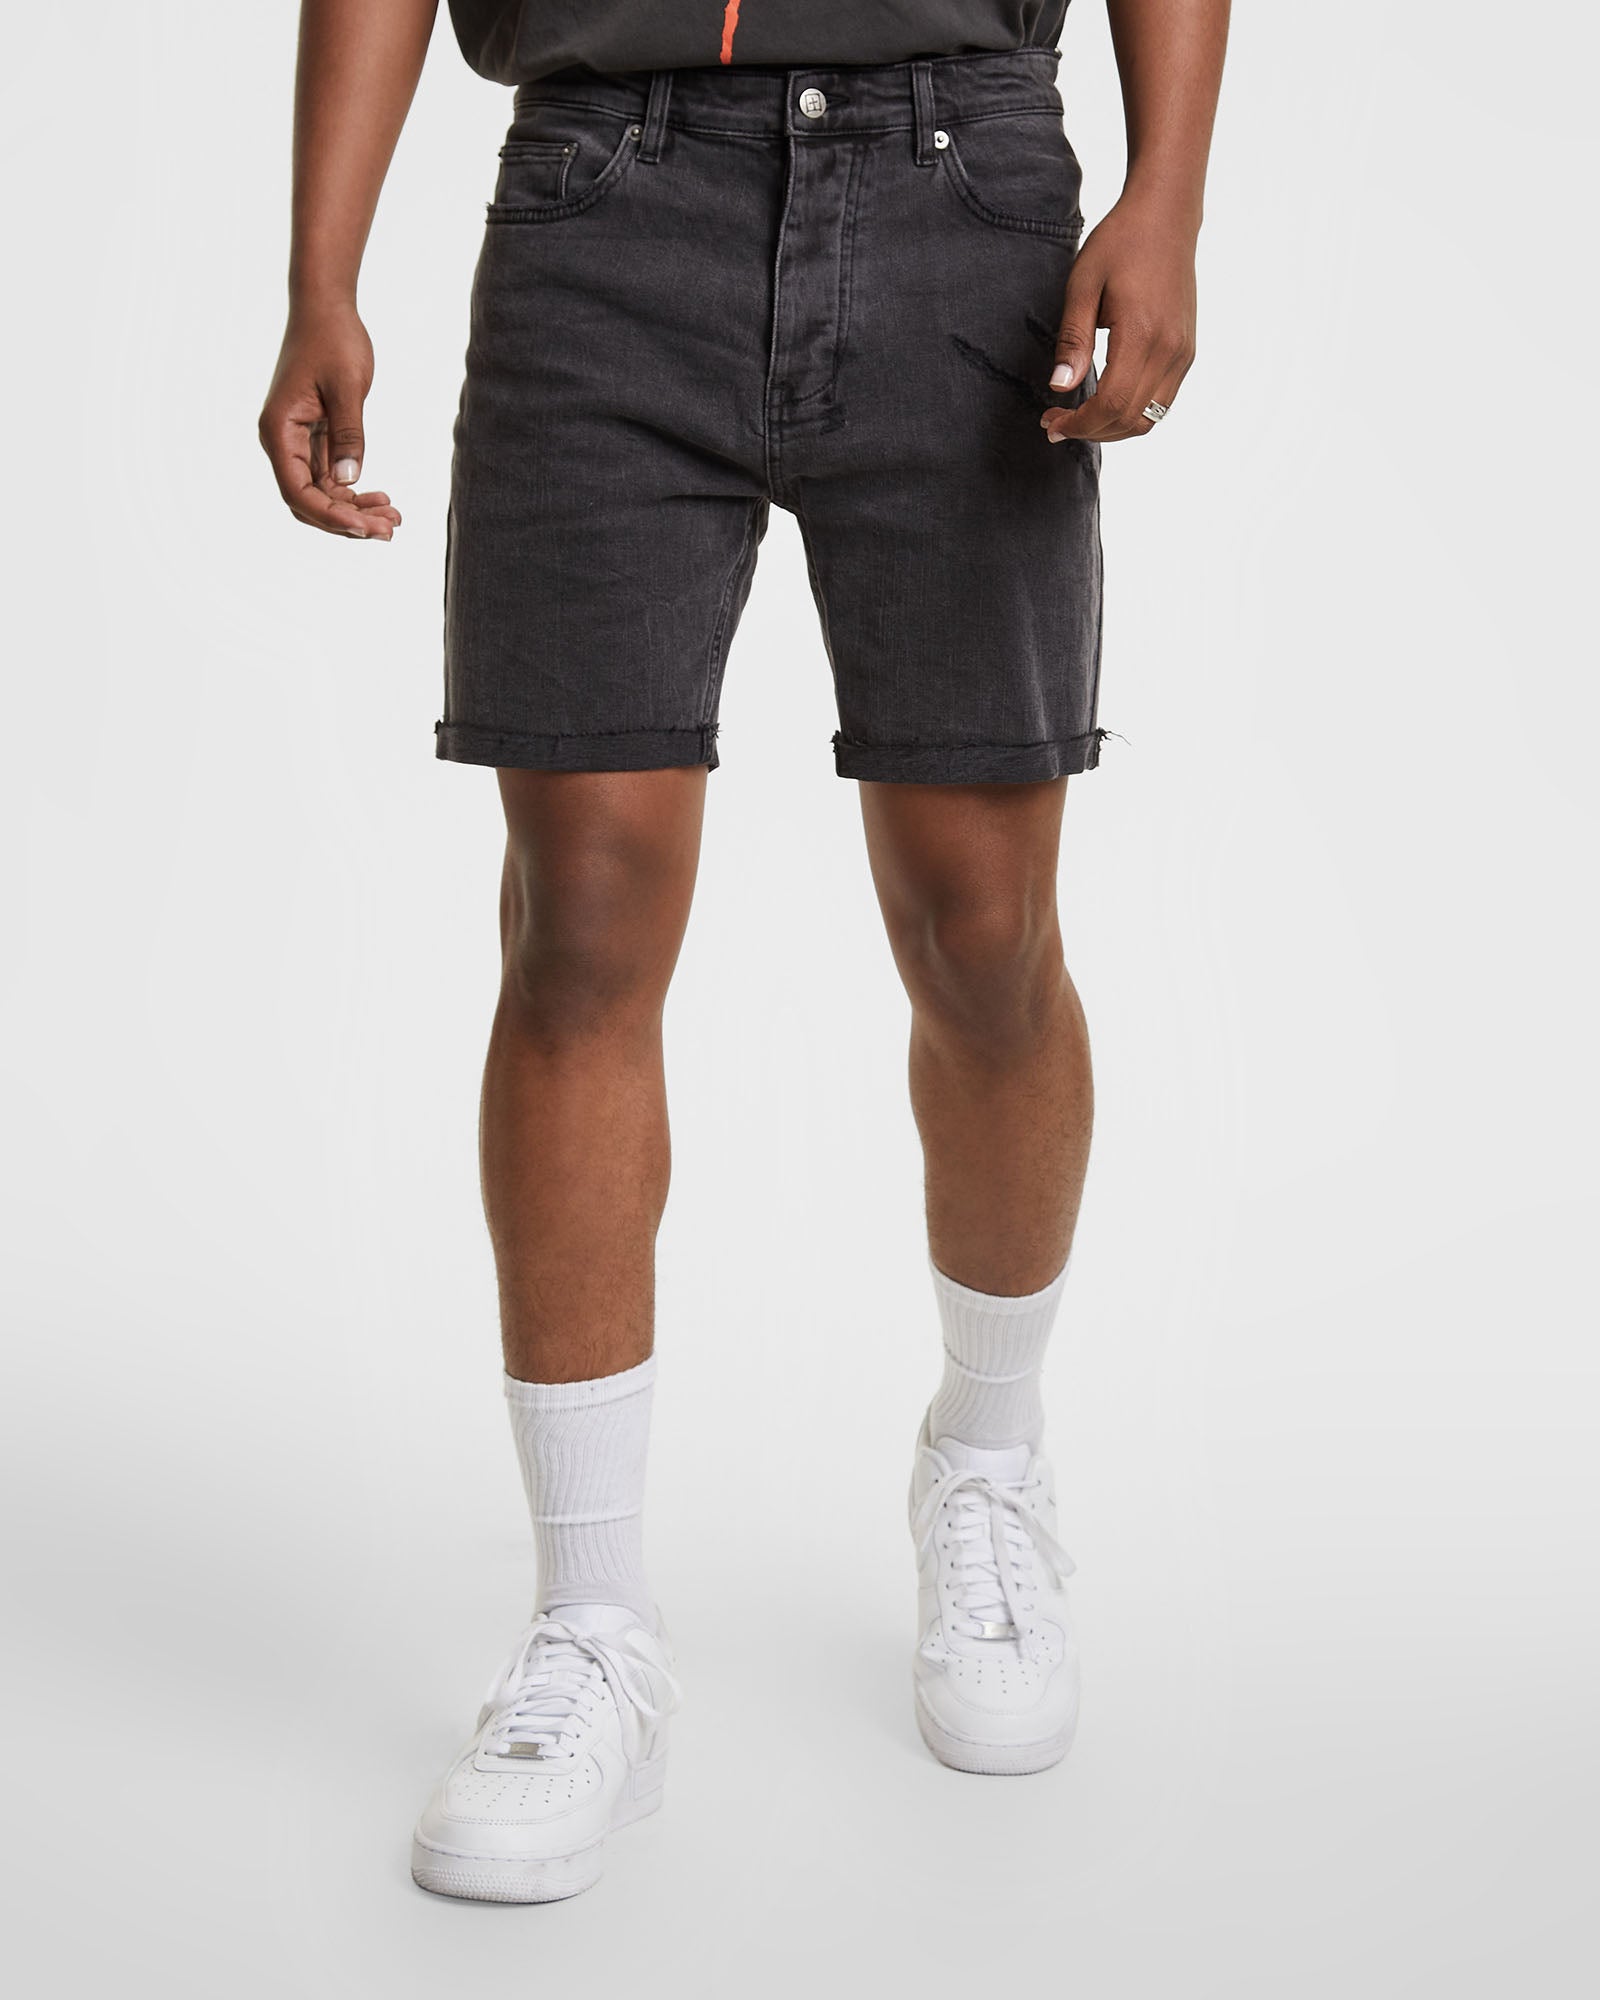 Men's Shorts | Denim, Track & Jean Short | Ksubi US